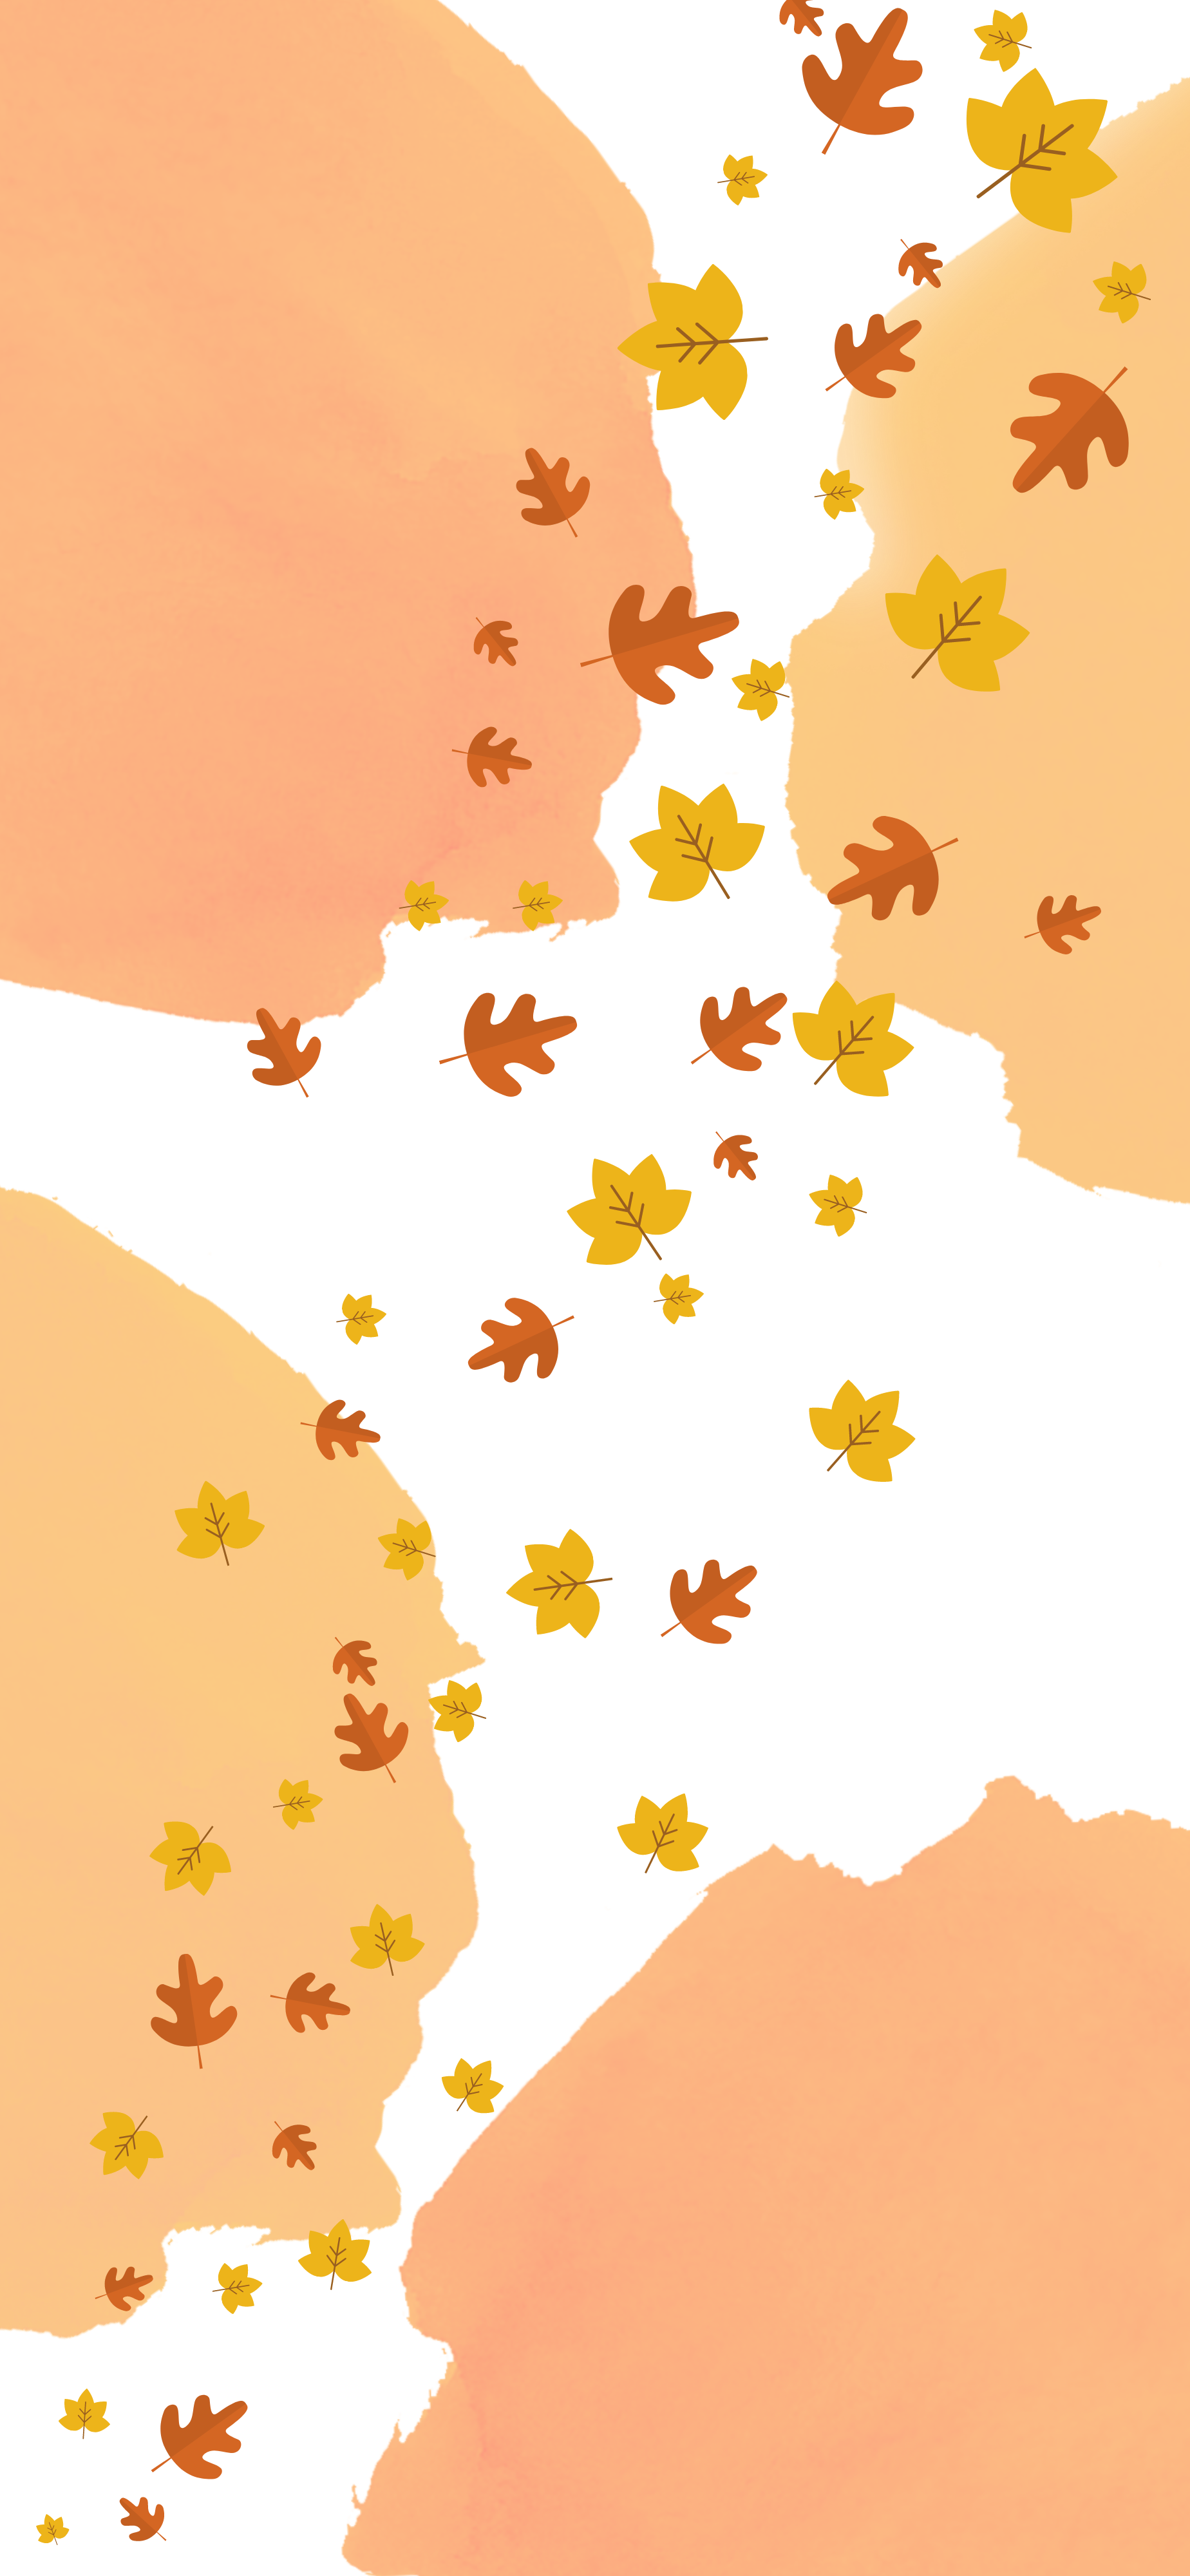 Fall Halloween Autumn Wallpaper Background for iPhone. Fall wallpaper, iPhone wallpaper fall, iPhone background wallpaper